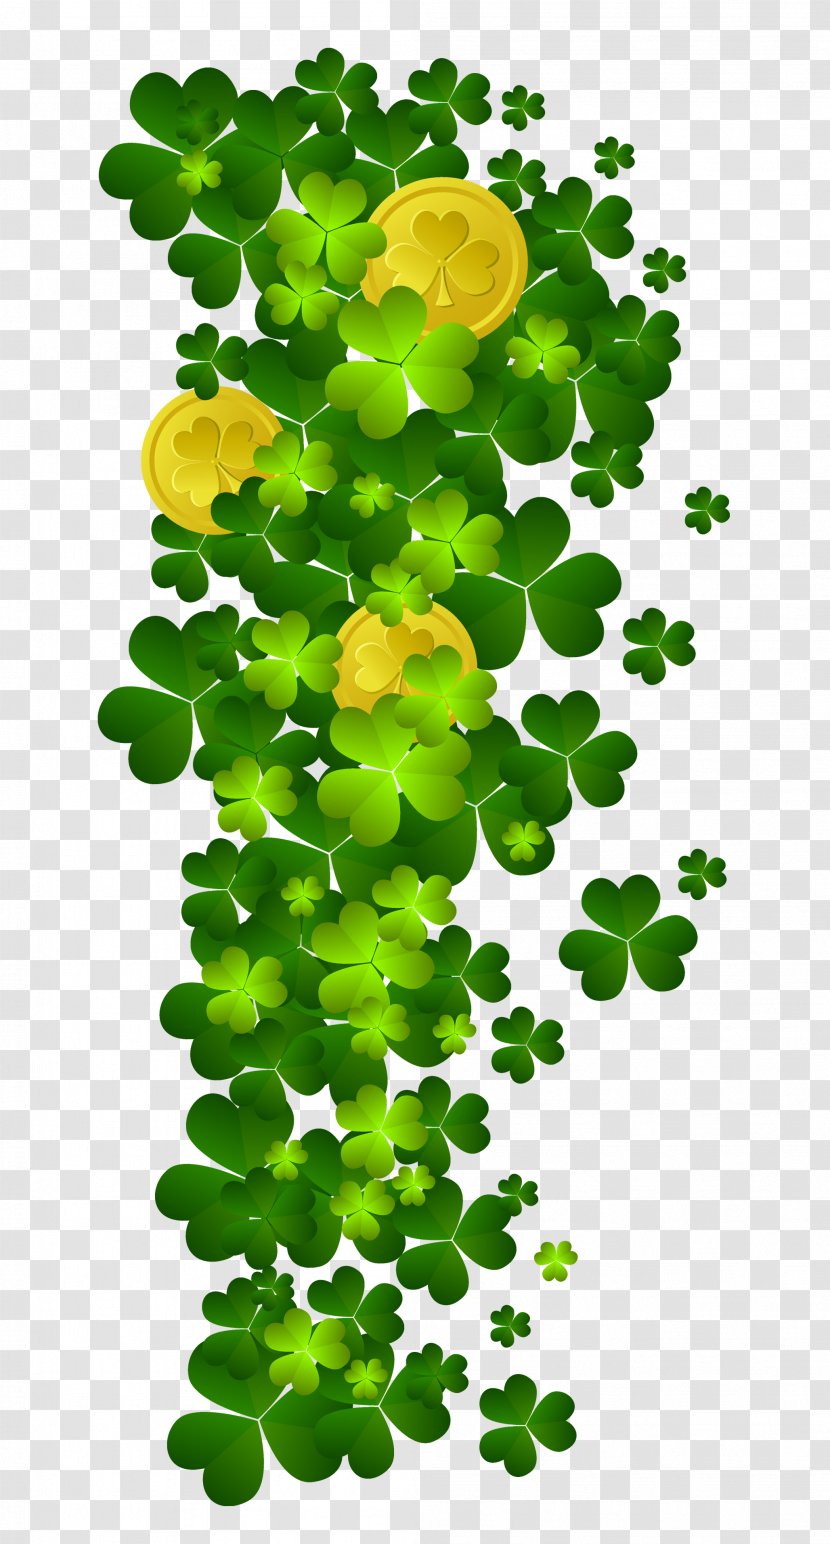 Saint Patrick's Day St. Shamrocks Clip Art - Patrick - ST PATRICKS DAY Transparent PNG